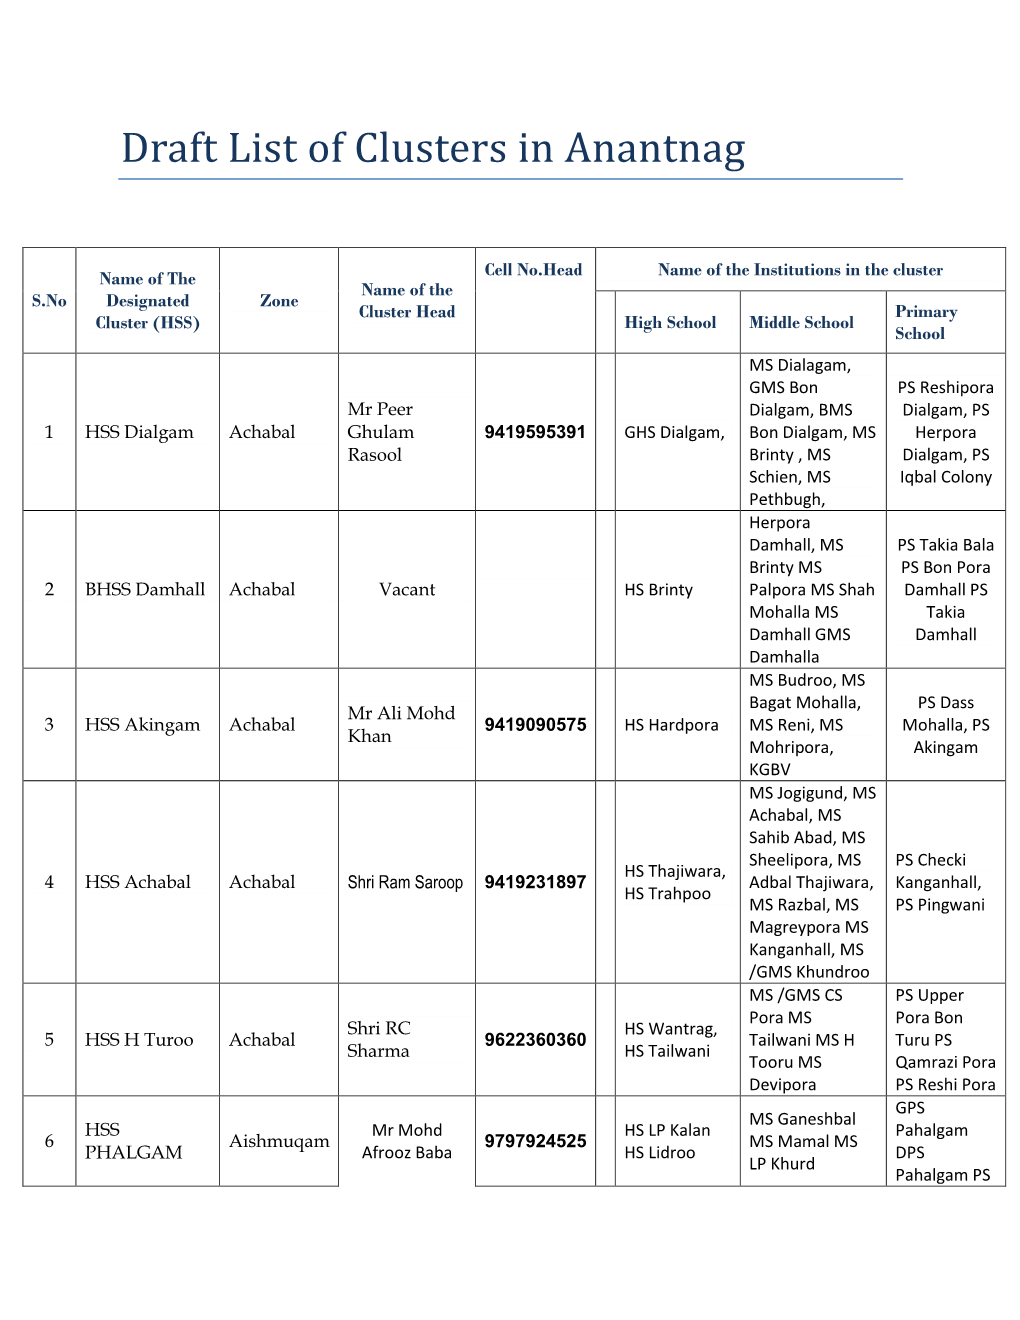 Draft List of Clusters in Anantnag